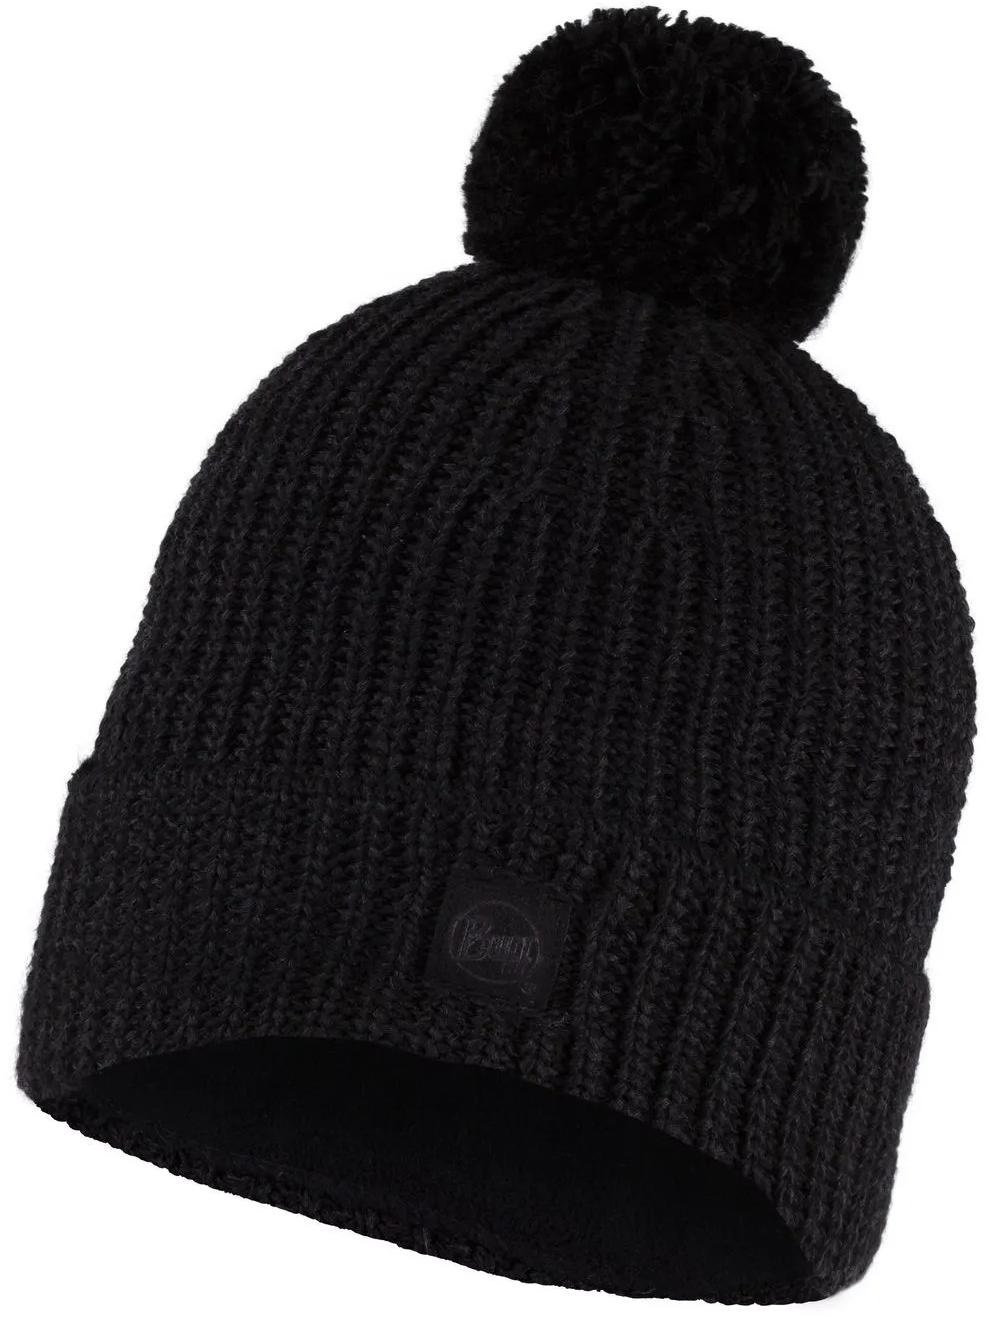 Шапка Buff Knitted & Fleece Band Hat Vaed Black, US:one size, 129619.999.10.00 шапка buff knitted hat nerla nerla grey us one size 132335 937 10 00